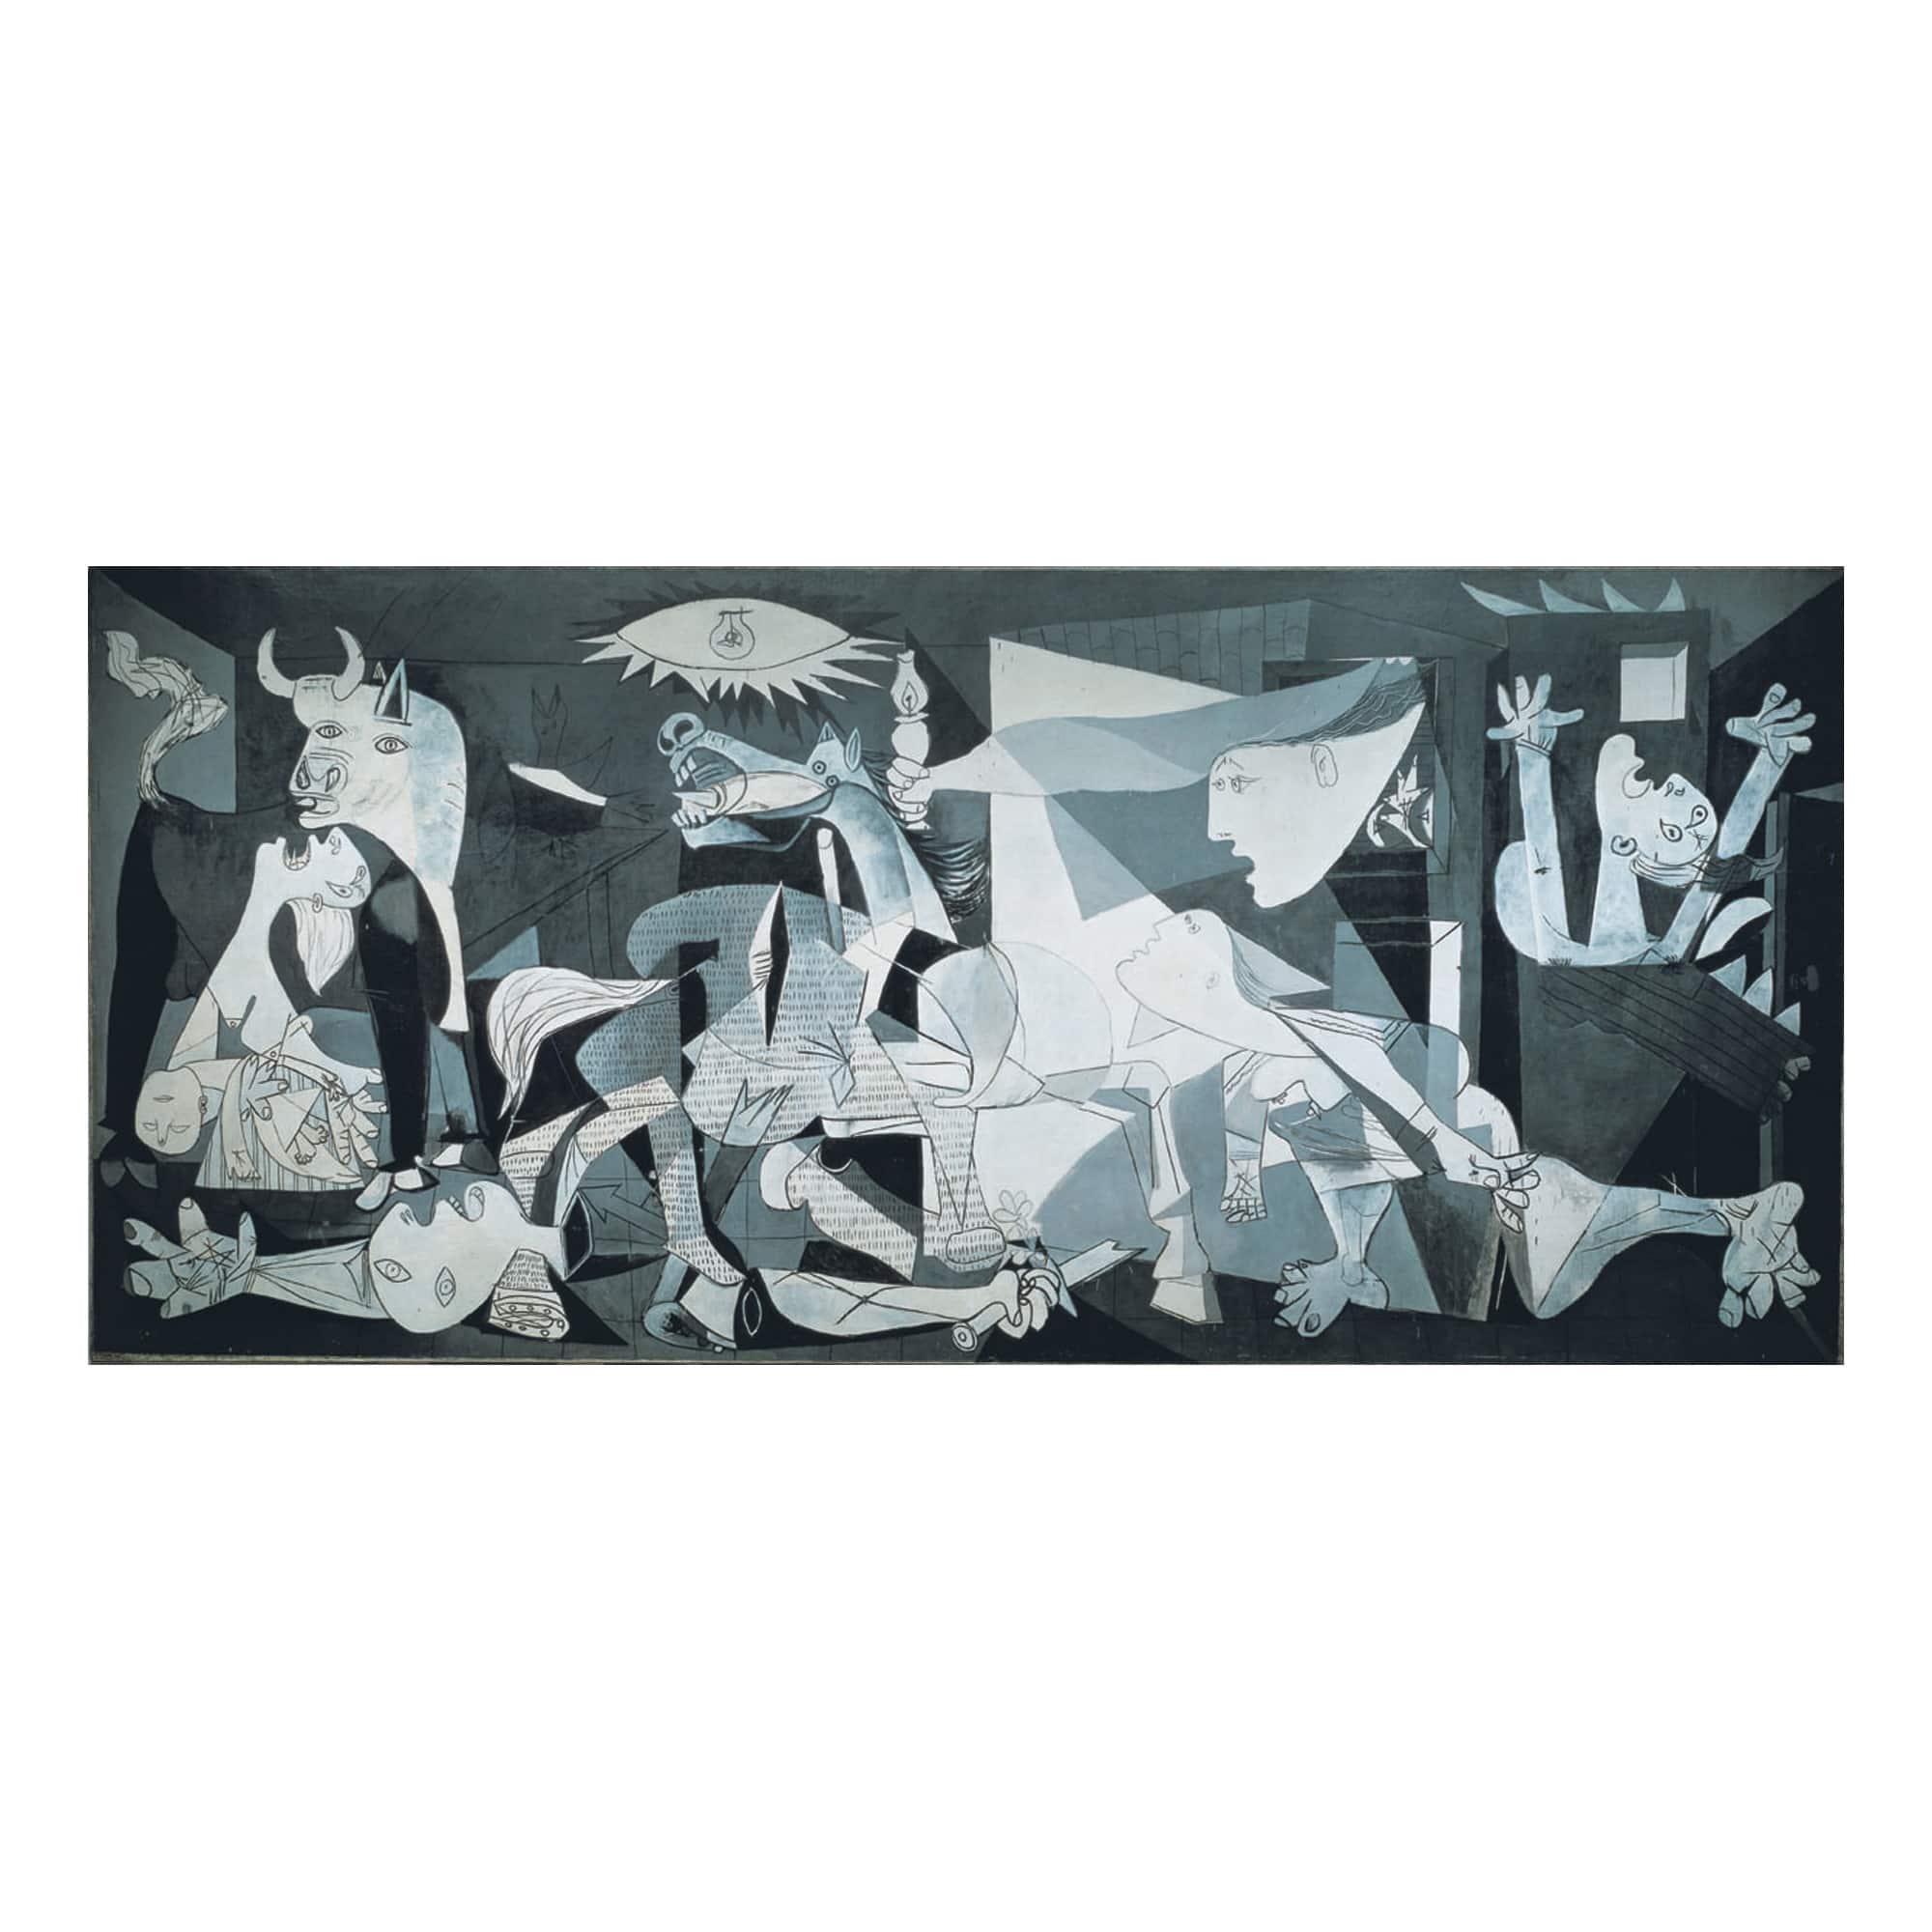 Puzzle Picasso. Guernica (3000 piezas) – Tienda Museo Reina Sofia